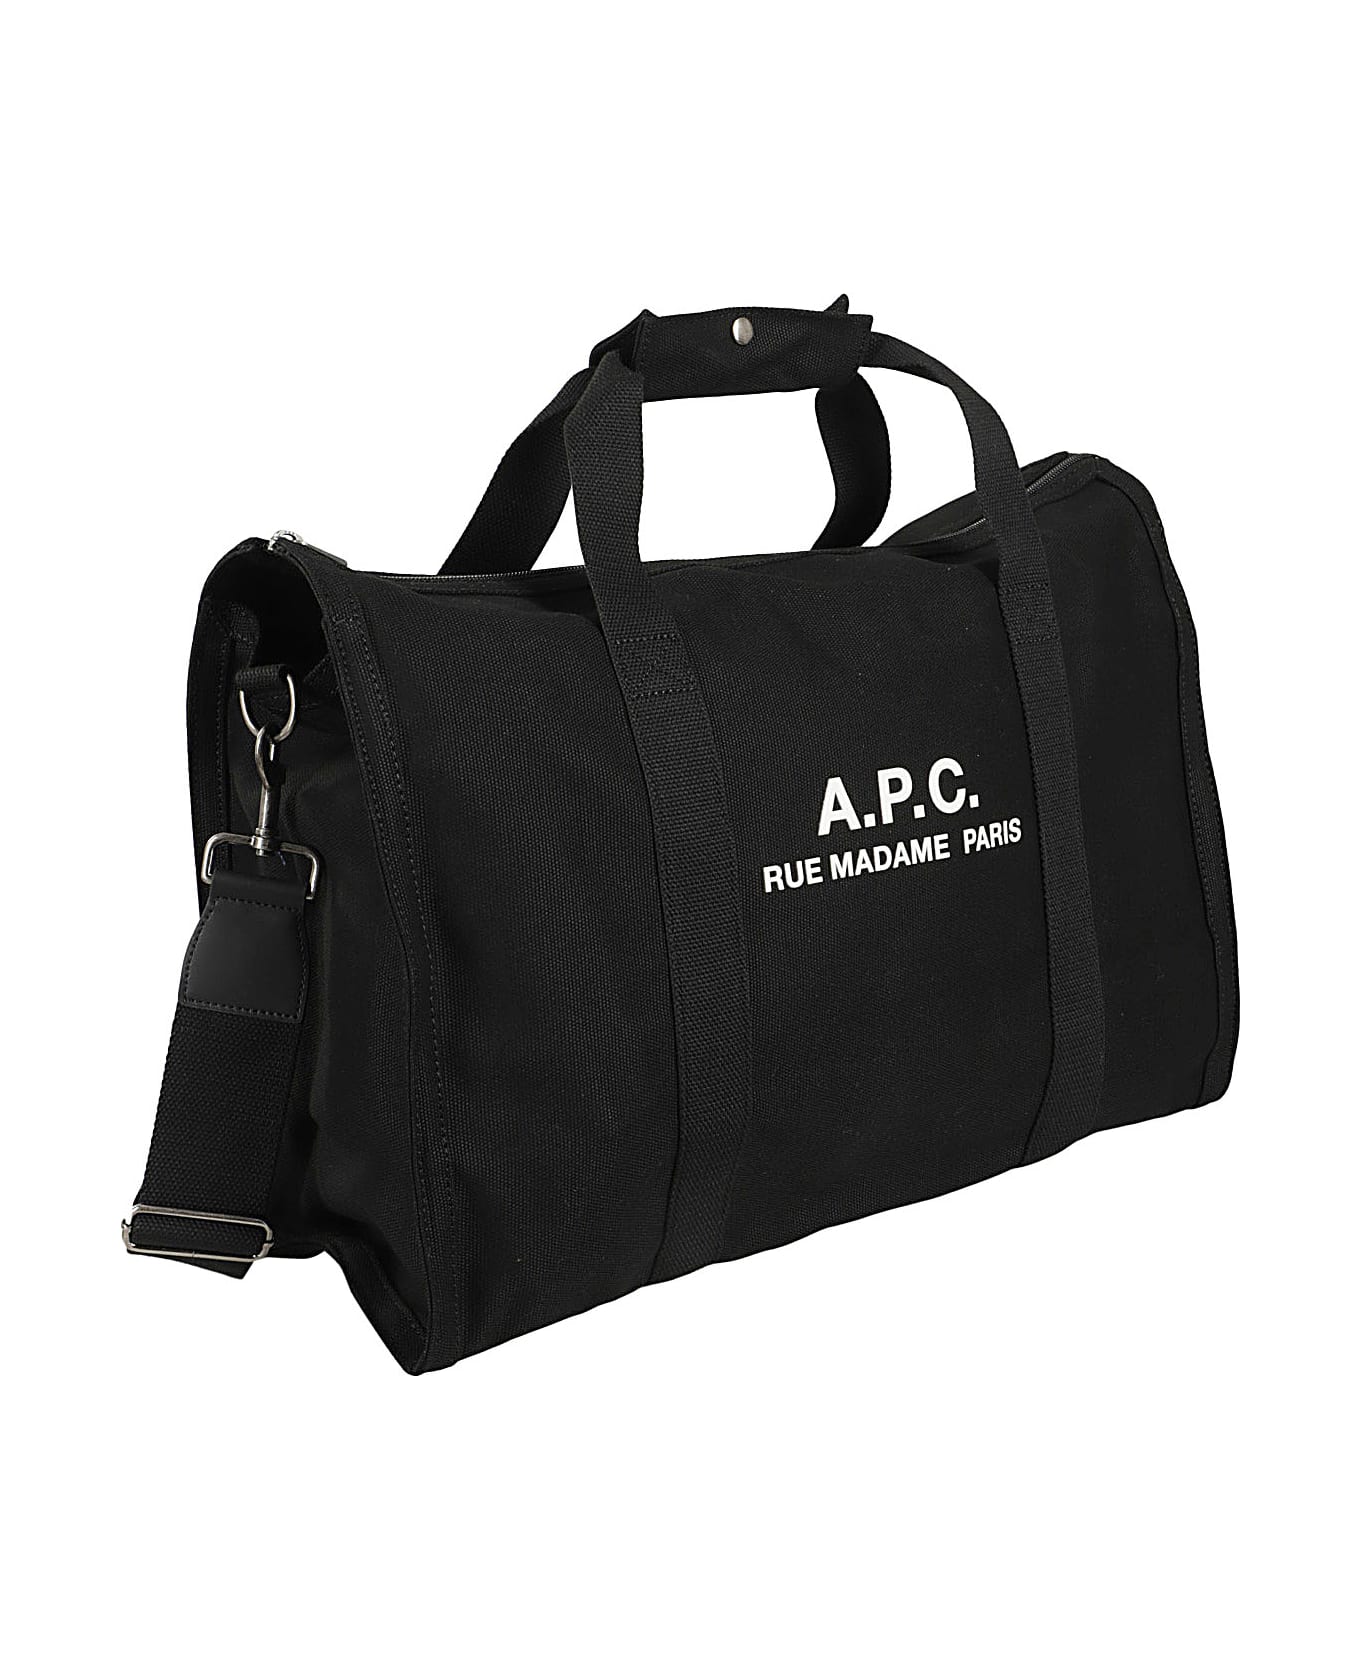 A.P.C. Gym Bag Recuperation - Lzz Black